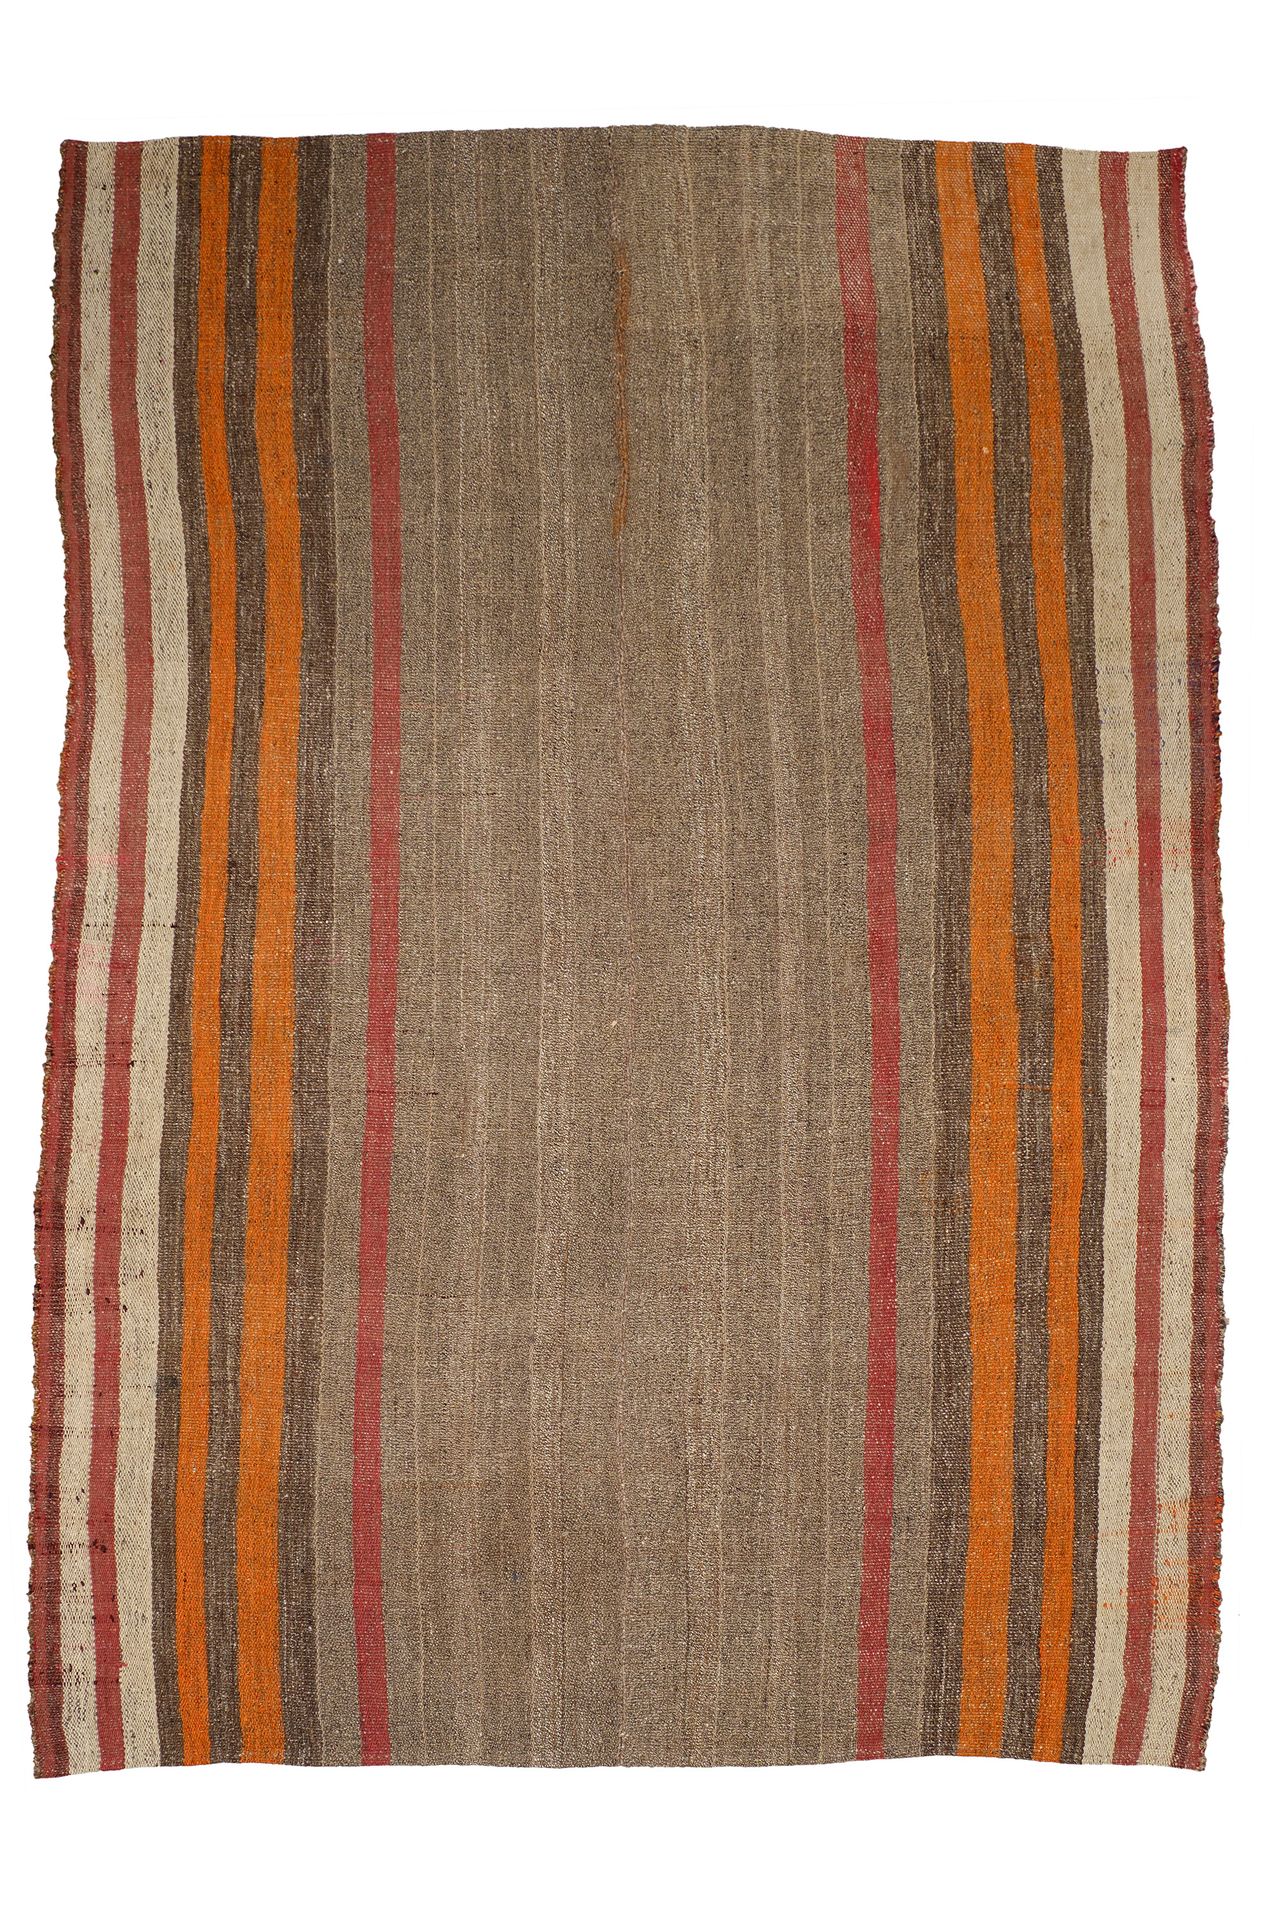 Qashqai Rug - c.1880 Iran - Lori people

Wool and vegetal dye - 279 cm x 178 cm